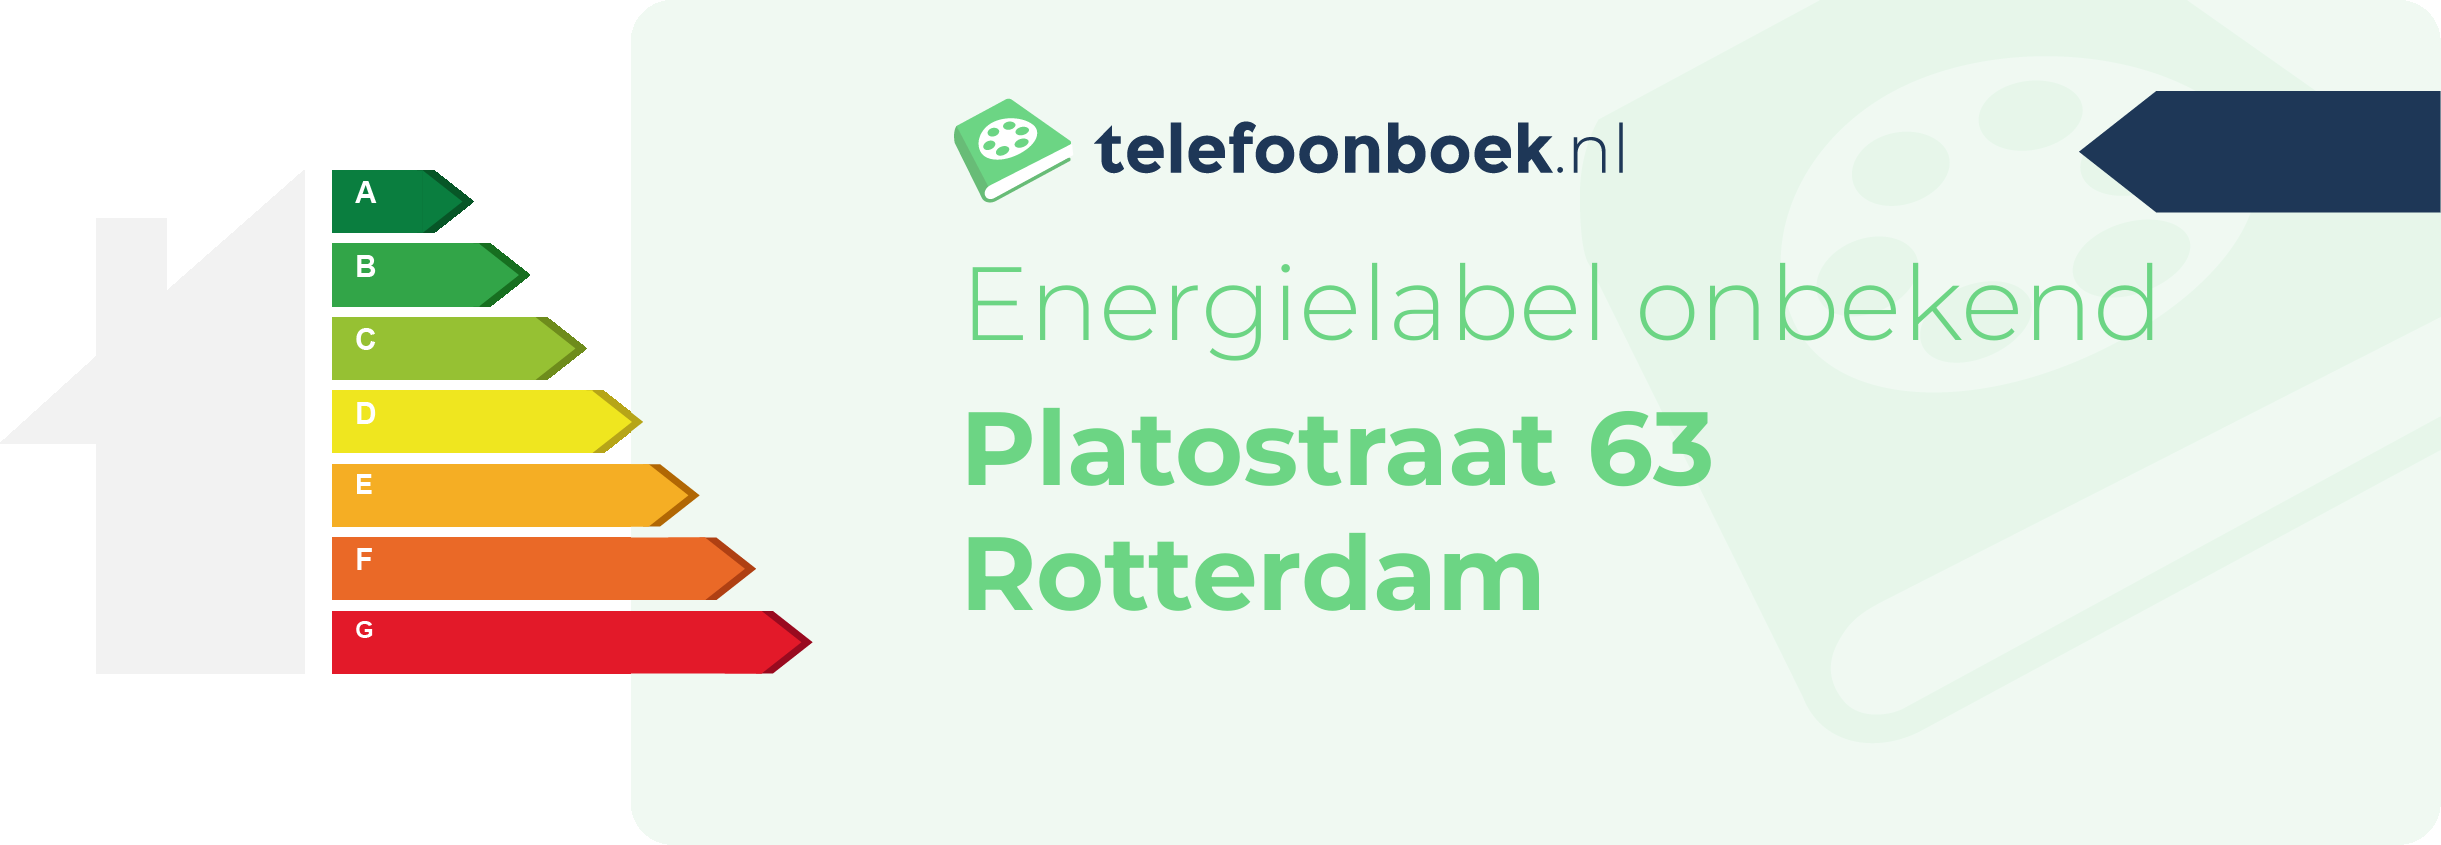 Energielabel Platostraat 63 Rotterdam